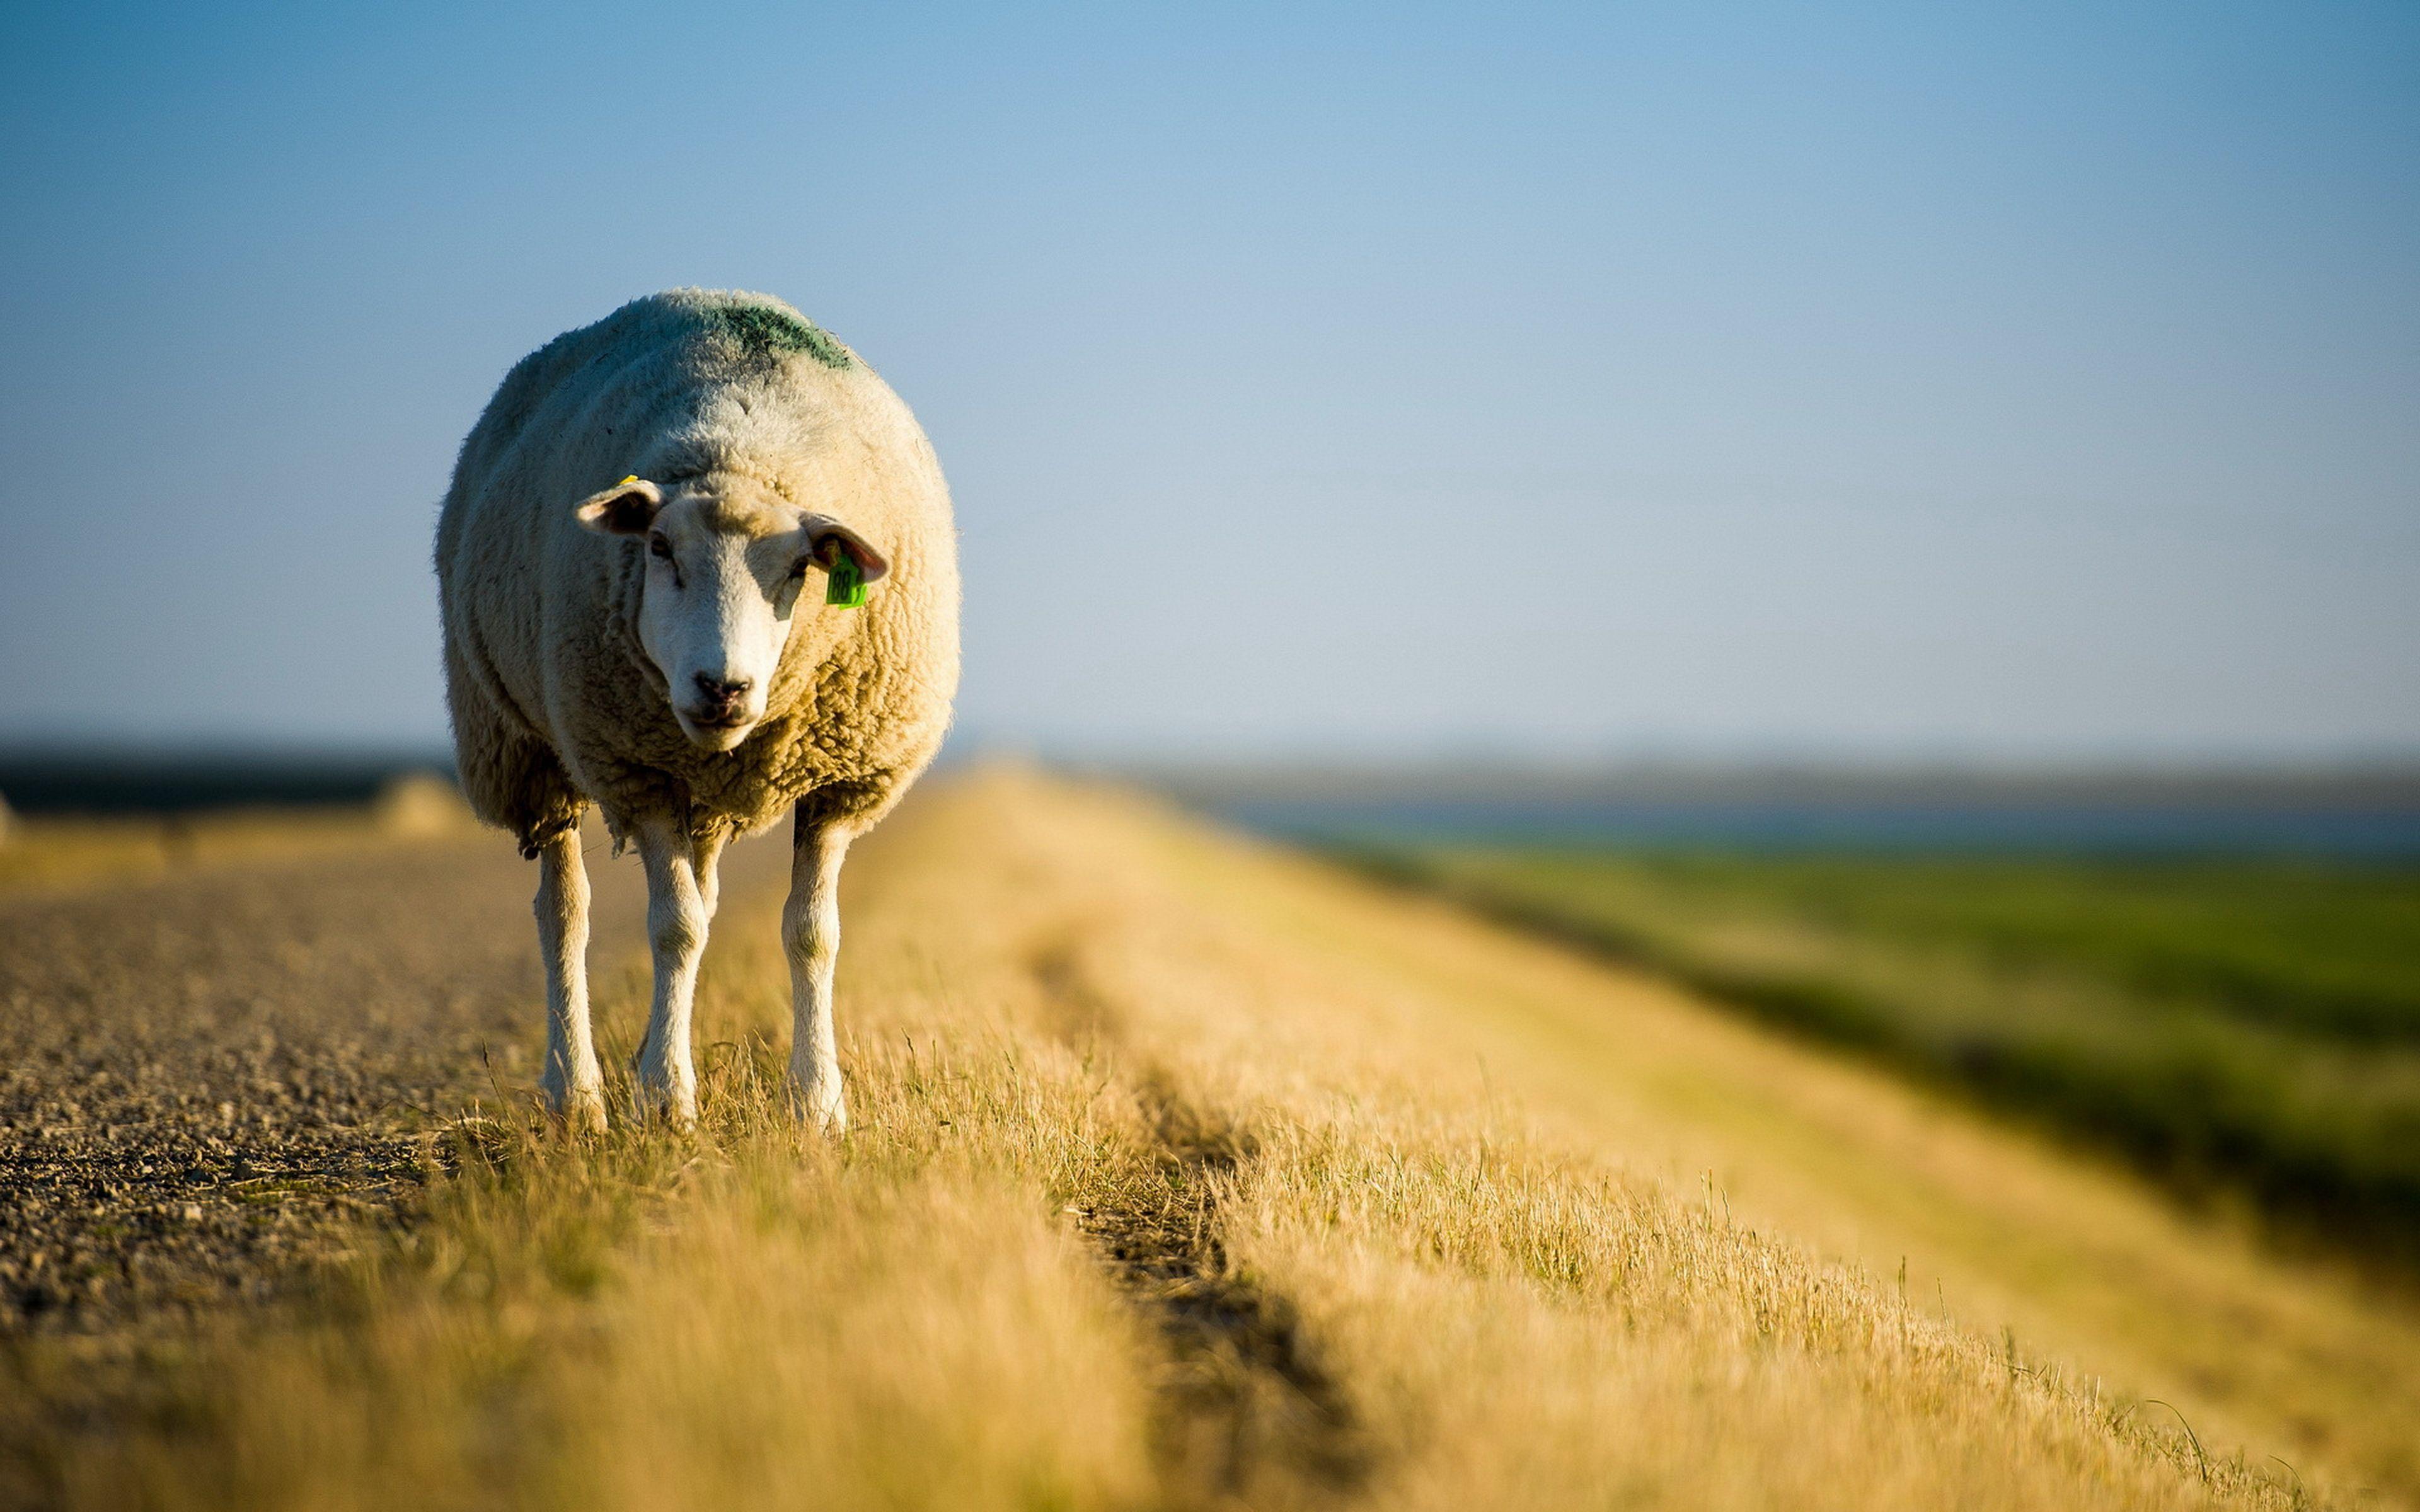 Sheep Wallpaper, Image, Photo, Picture & Pics #sheep #wallpaper